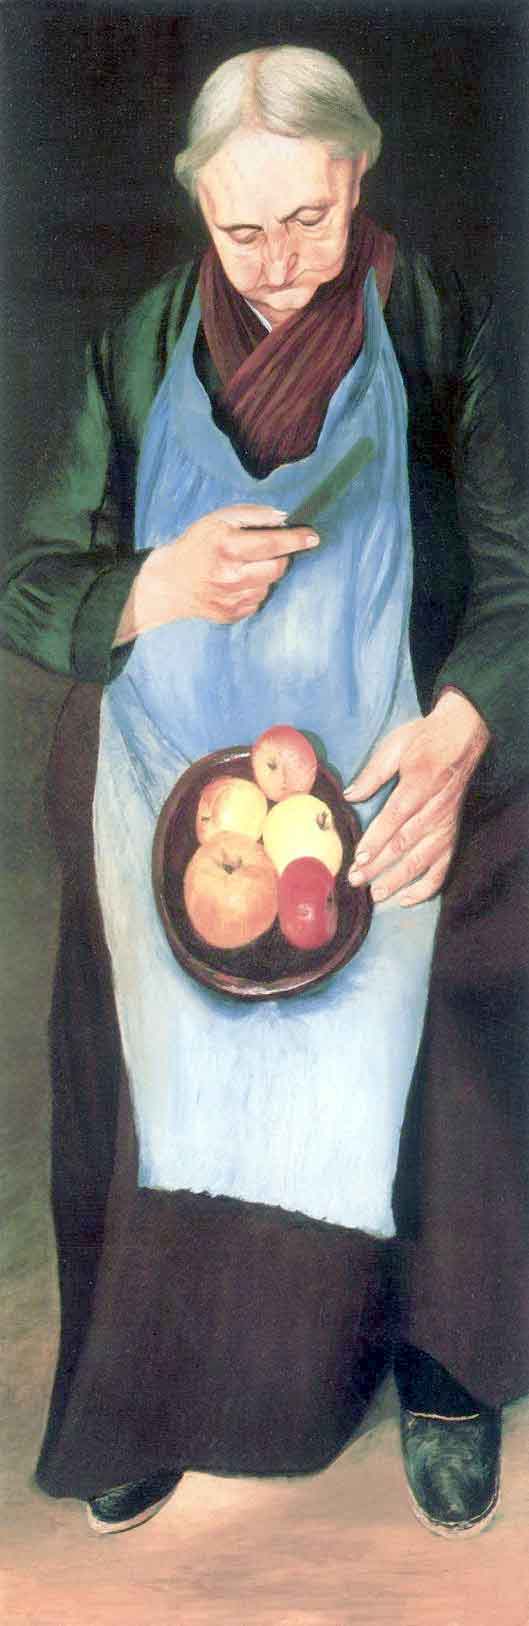 Old Woman Peeliing Apple